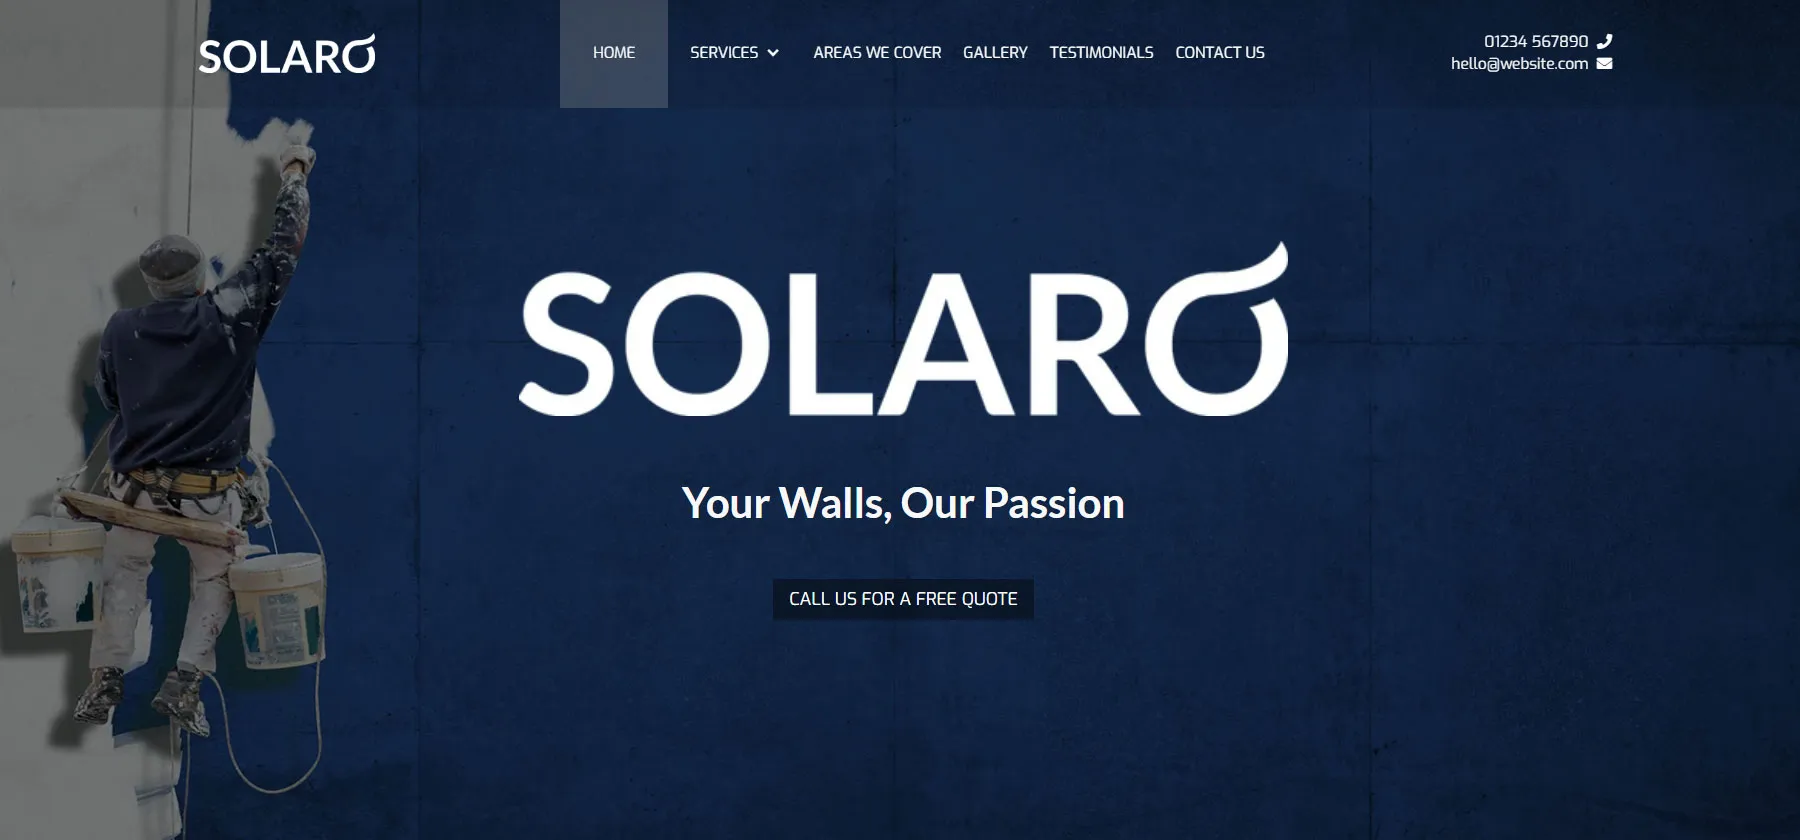 Solaro Website Theme